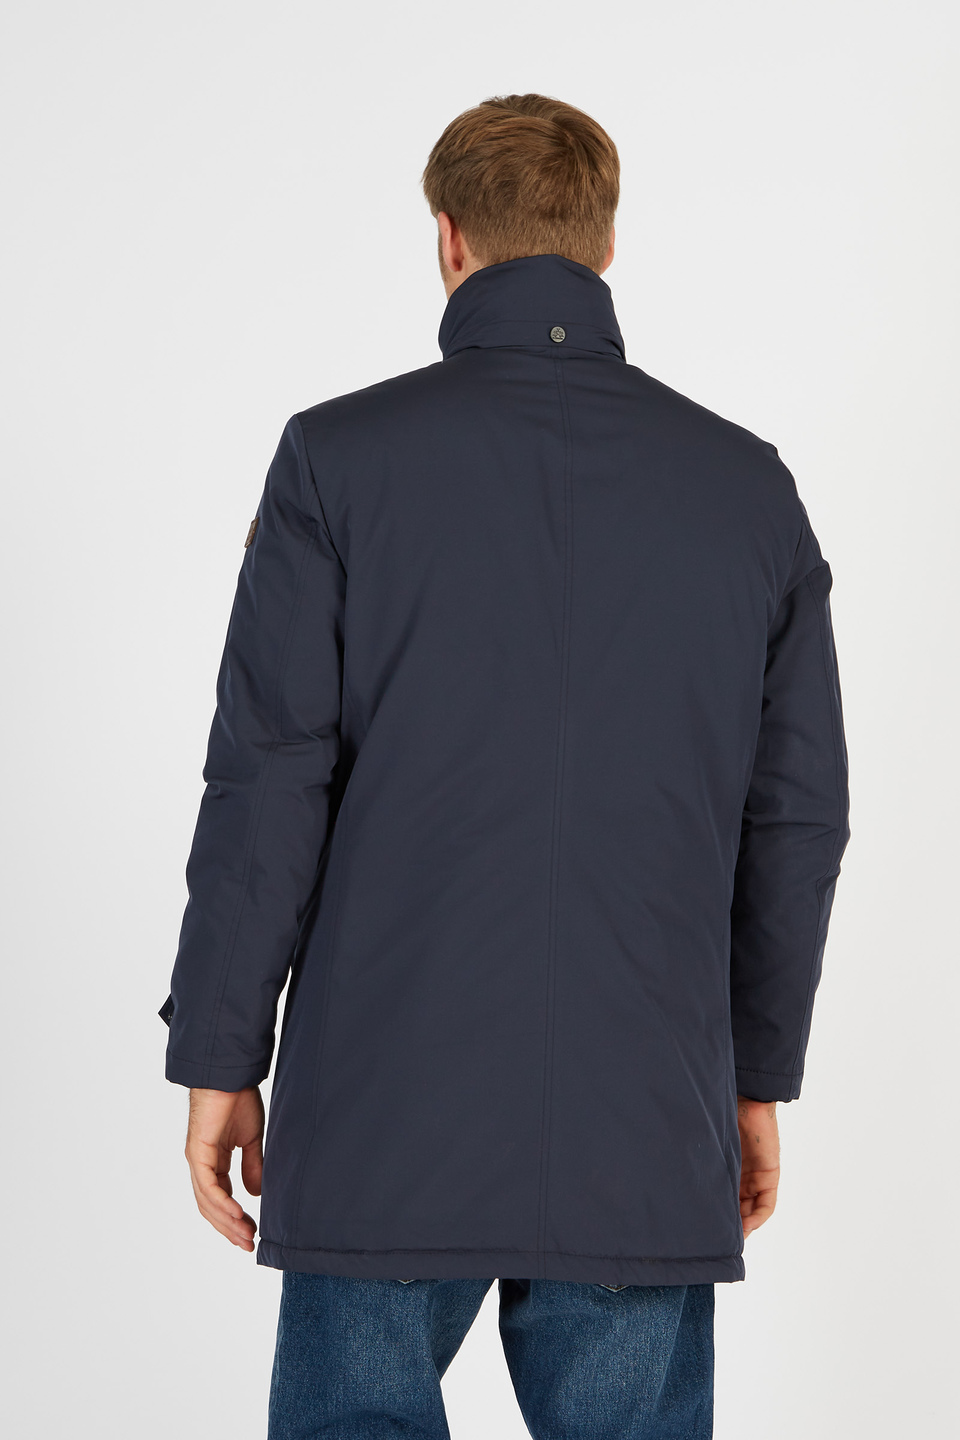 Herren Blue Ribbon Jacke aus Nylon mit normaler Passform | La Martina - Official Online Shop